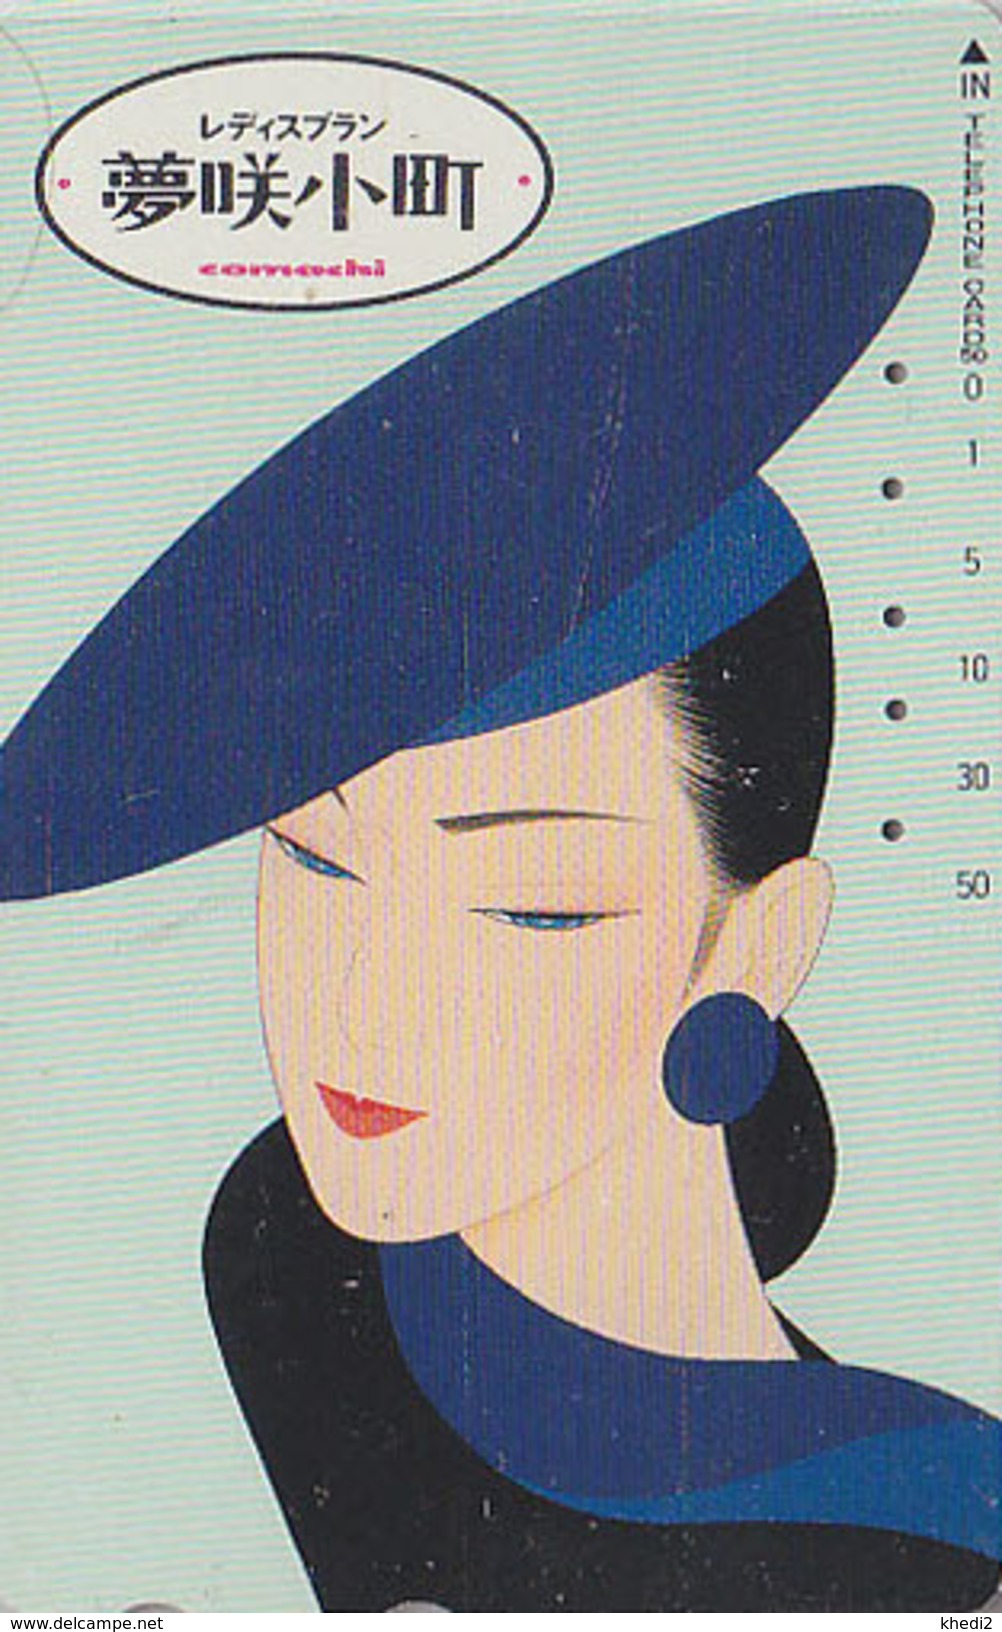 Télécarte Japon / 390-11746 - Femme / COMACHI - Parfum Mode - Woman Girl Perfume Japan Phonecard - Frau TK - 2756 - Perfume